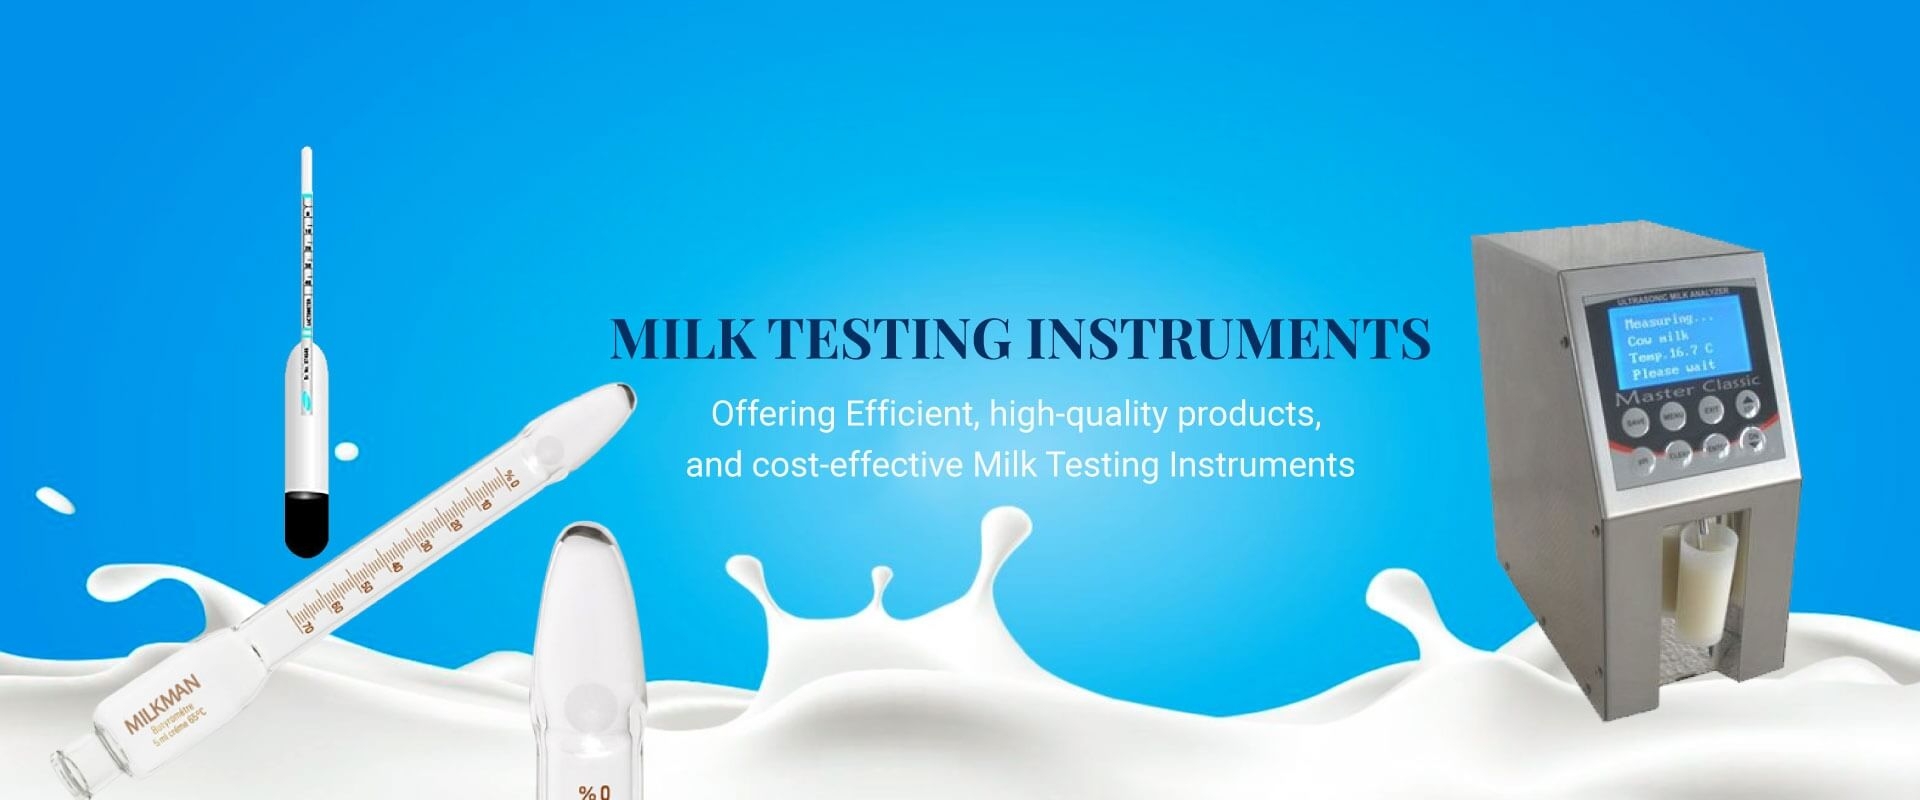 Milk Testing Instruments in Germany